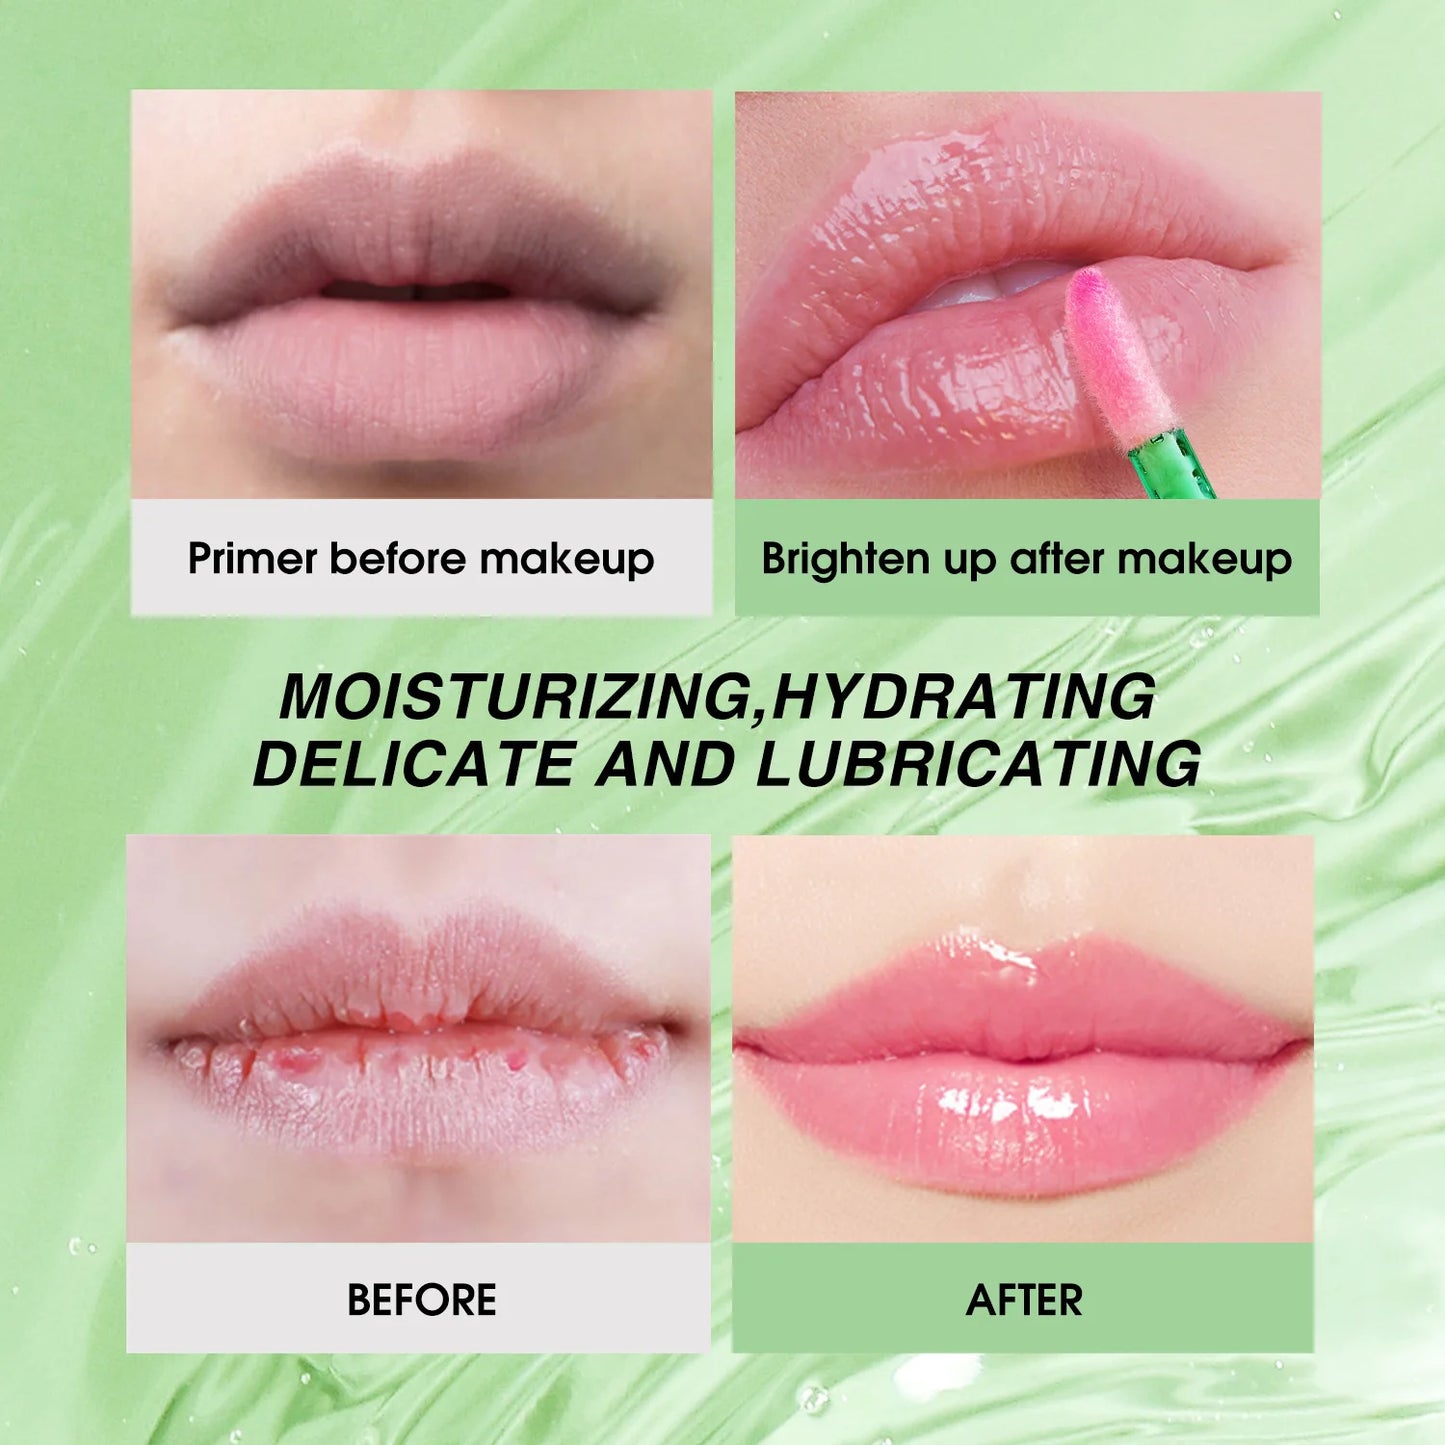 Natural Aloe Lipstick Lip Tint Long Lasting Waterproof Moisturizing Nourish Color Lip Gloss Changeable Color Lip Oil Lip Balm